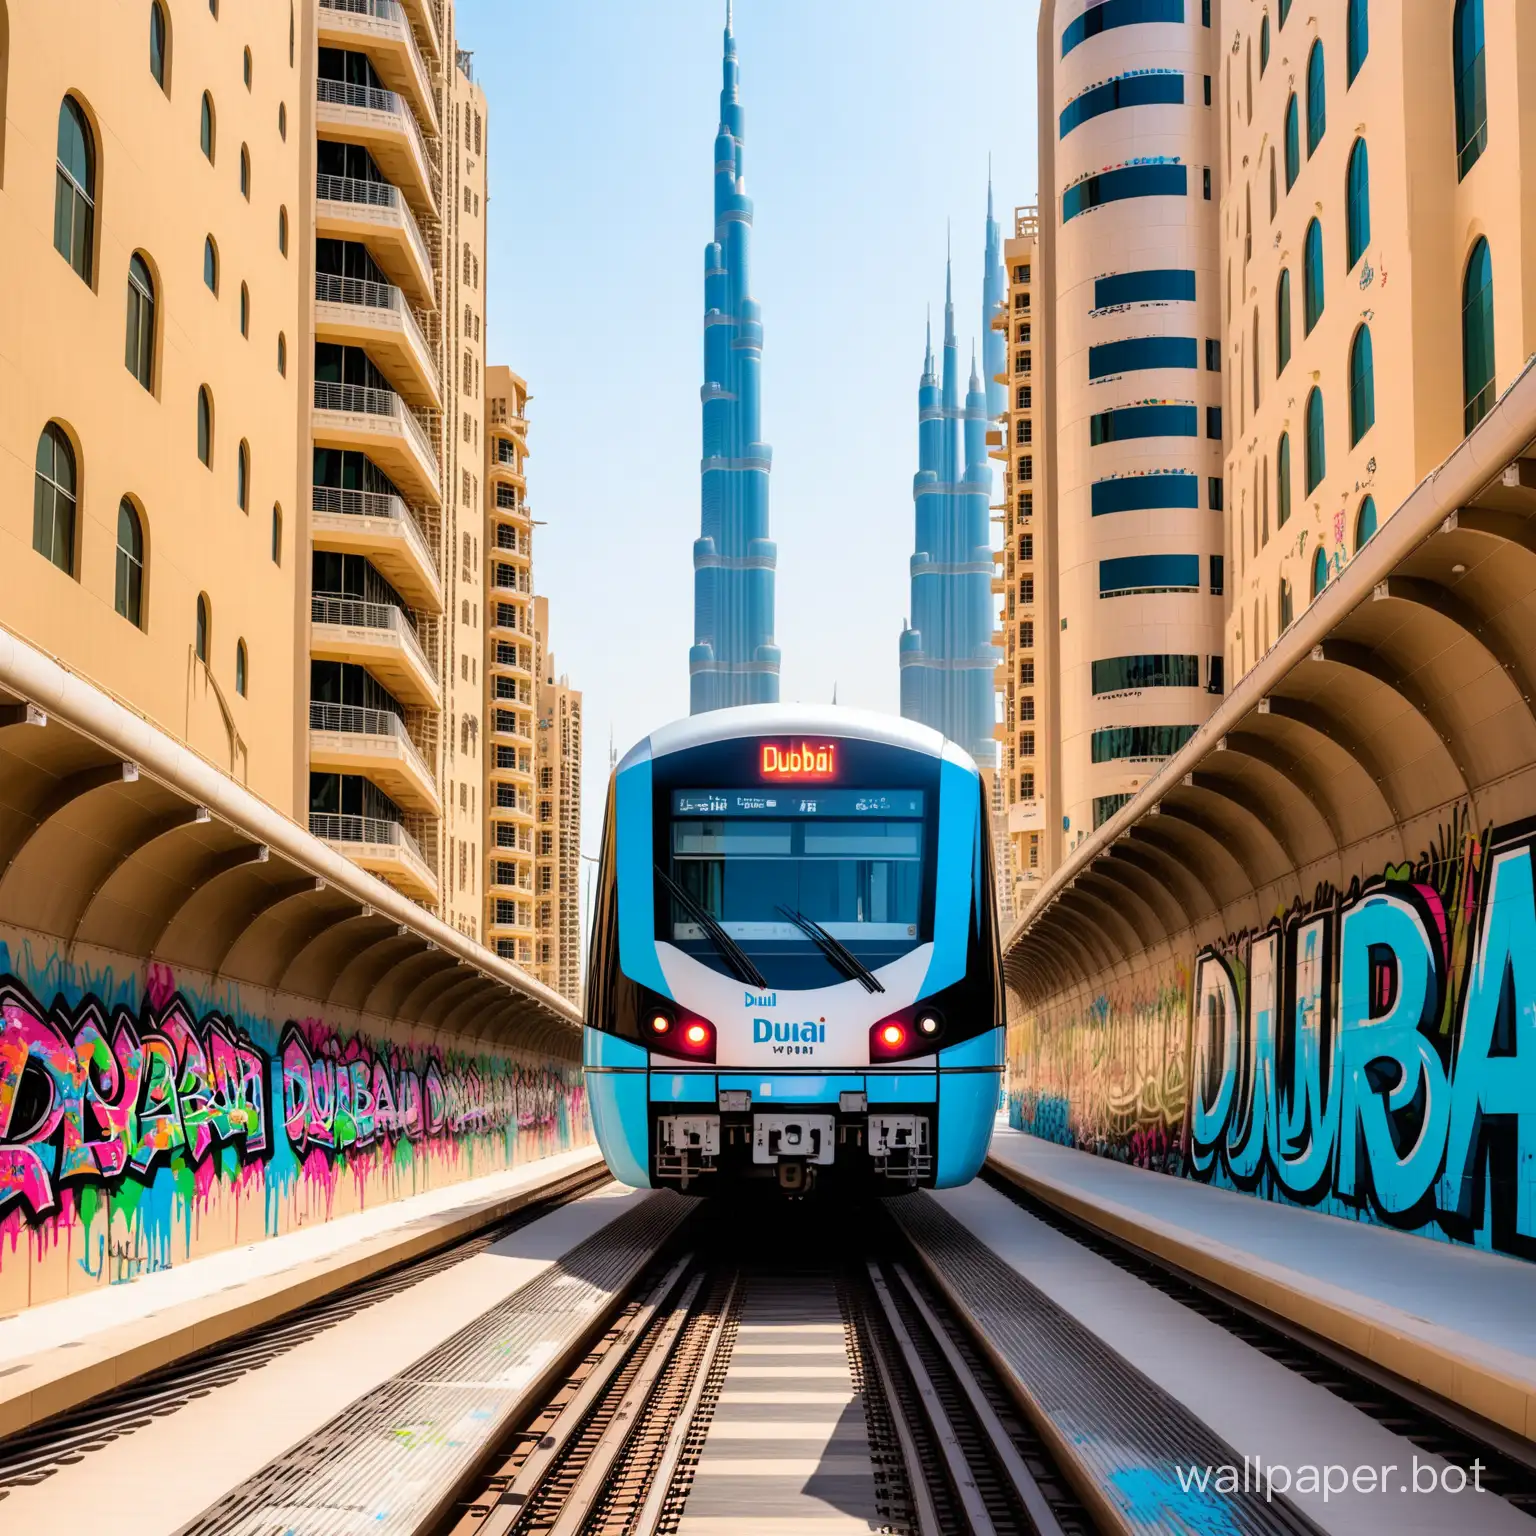 Create a  New York  style Urban Picture of Dubai with the Dubai  metro  covered  in cool graffiti  though the city of Dubai. give it a urban feel, make dubai look similar to New York